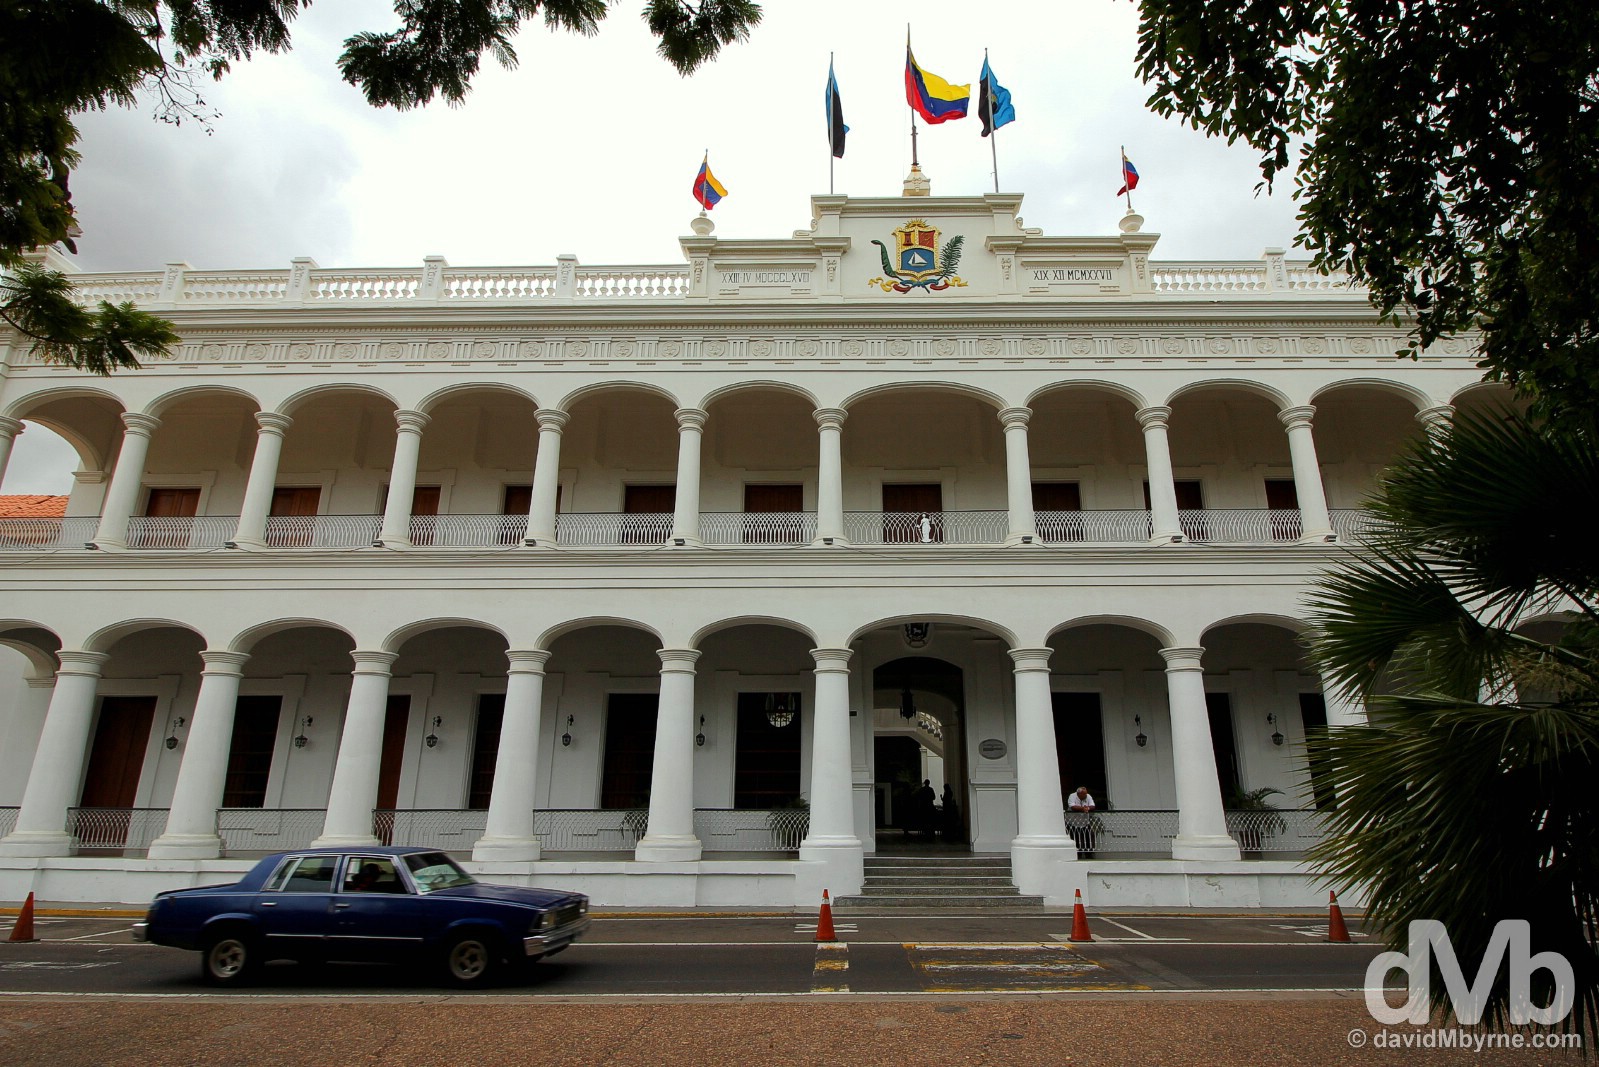 Government Palace in Plaza Bolivar, Maracaibo, Venezuela. June 22, 2015.